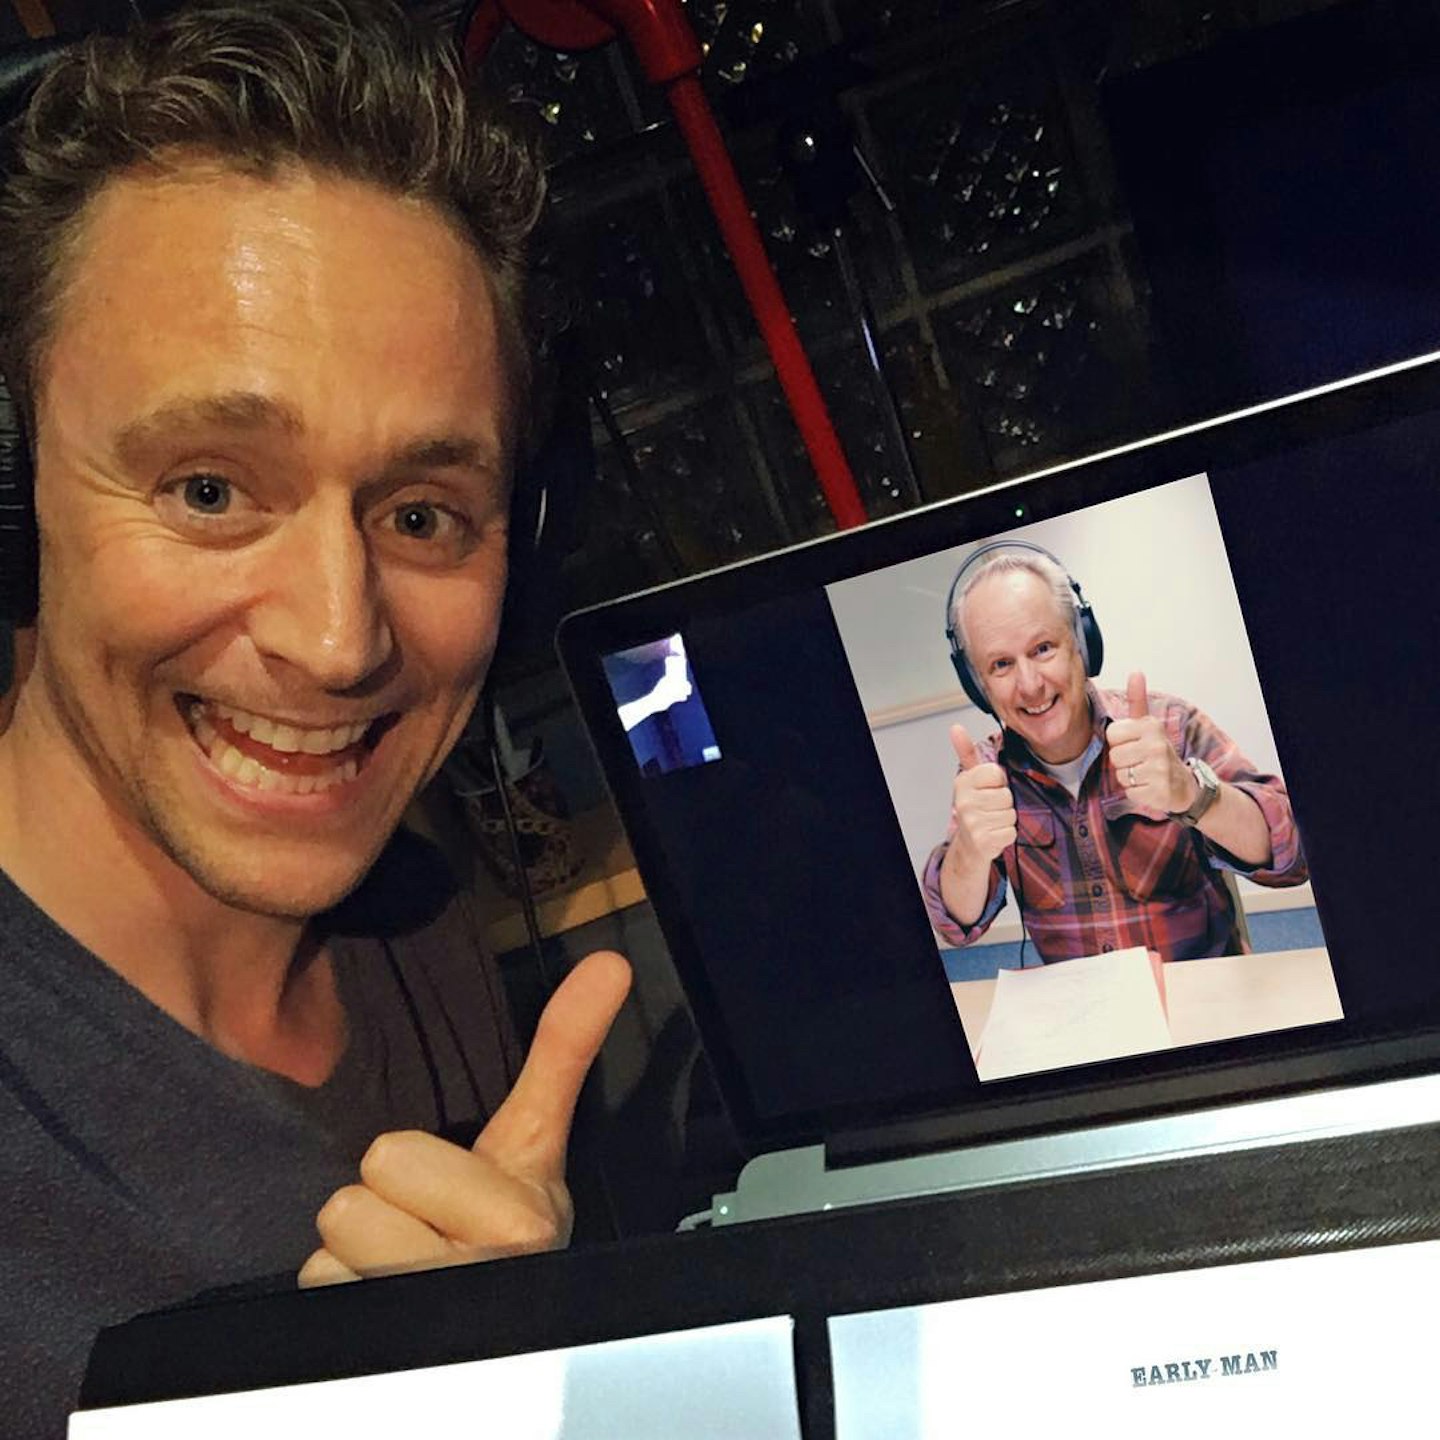 Tom Hiddleston Early Man announcement photo